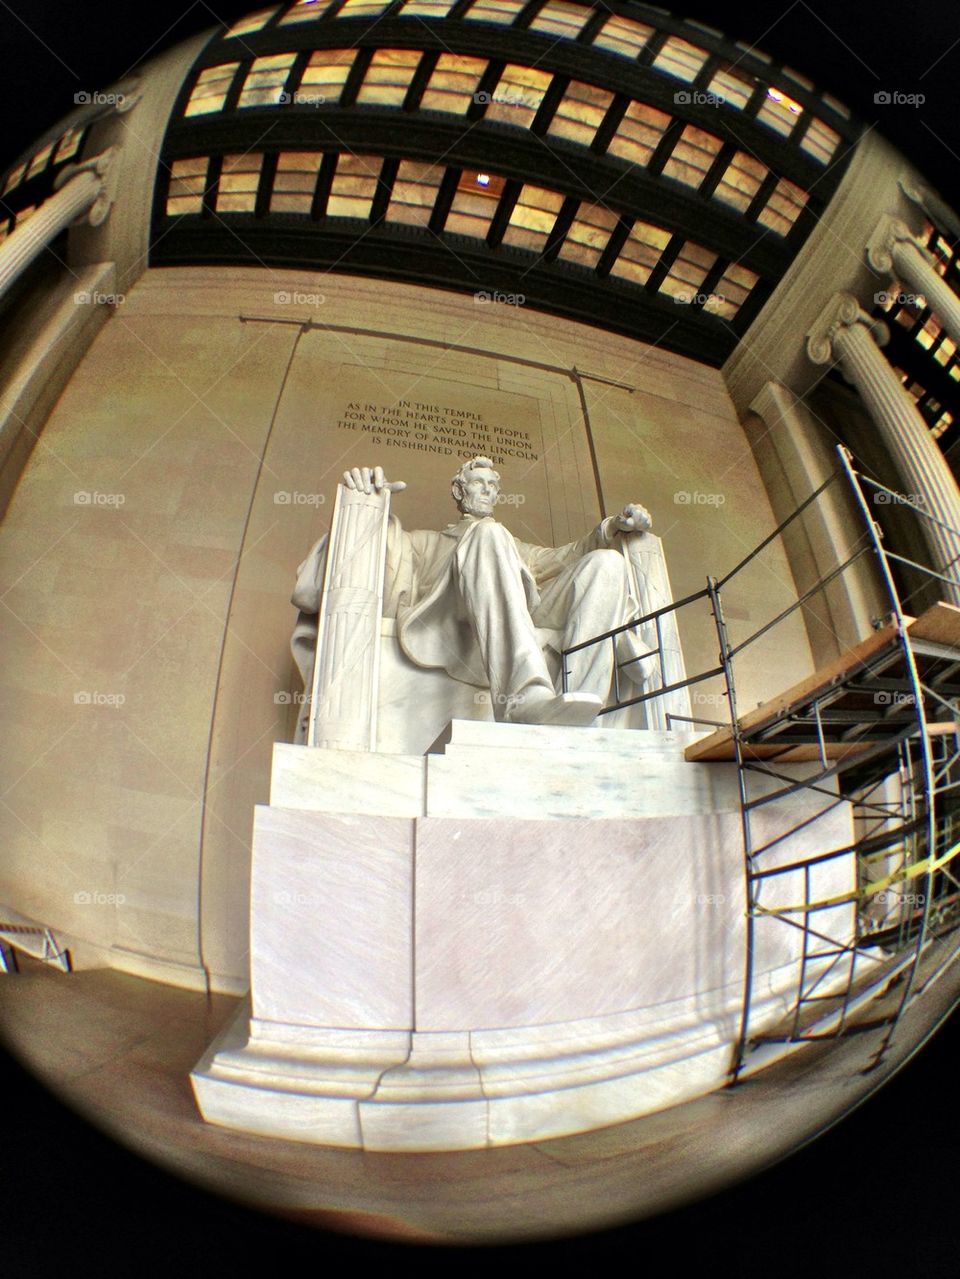 Lincoln memorial being un-defaced